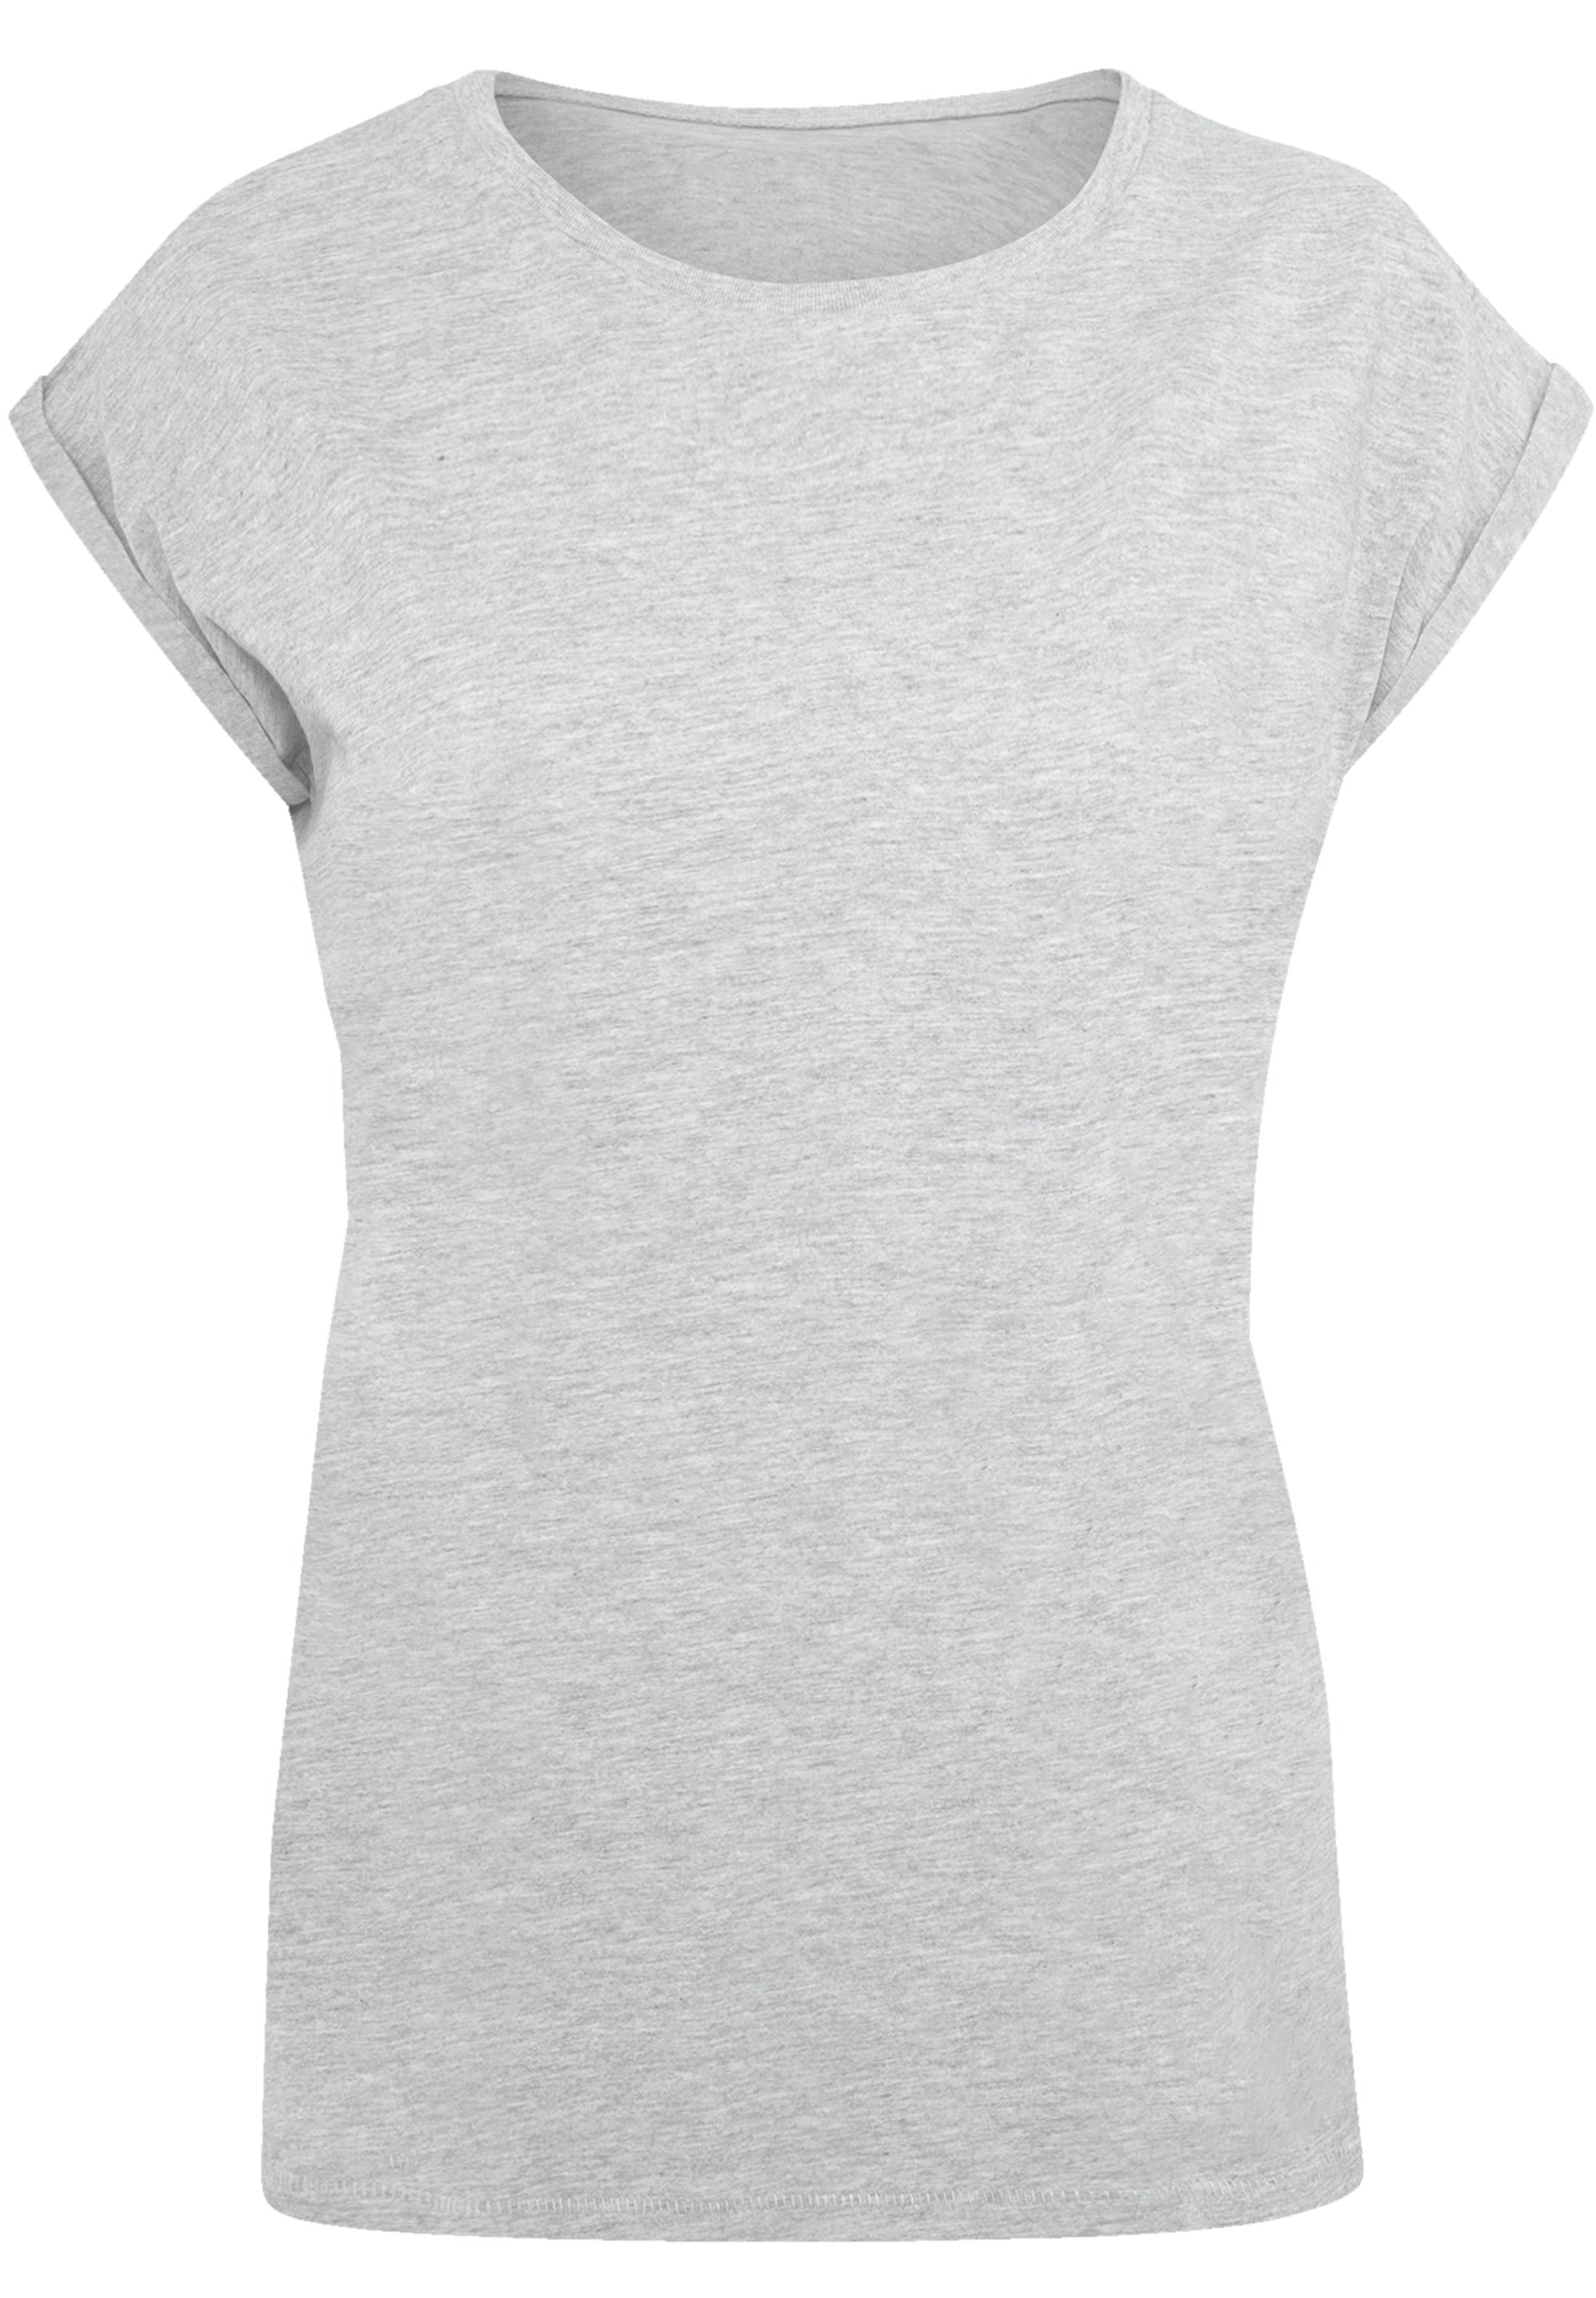 Print | T-Shirt F4NT4STIC BAUR SIZE Bora Island«, Leewards Bora kaufen für »PLUS